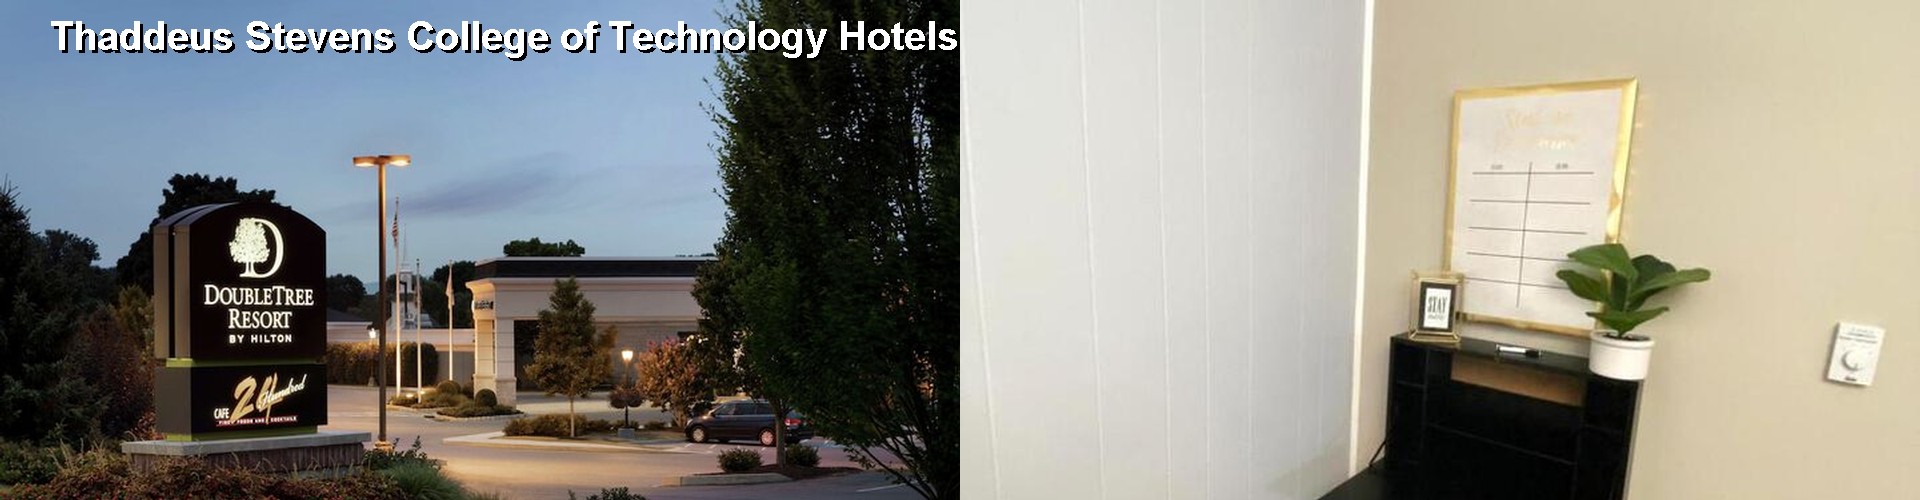 5 Best Hotels near Thaddeus Stevens College of Technology